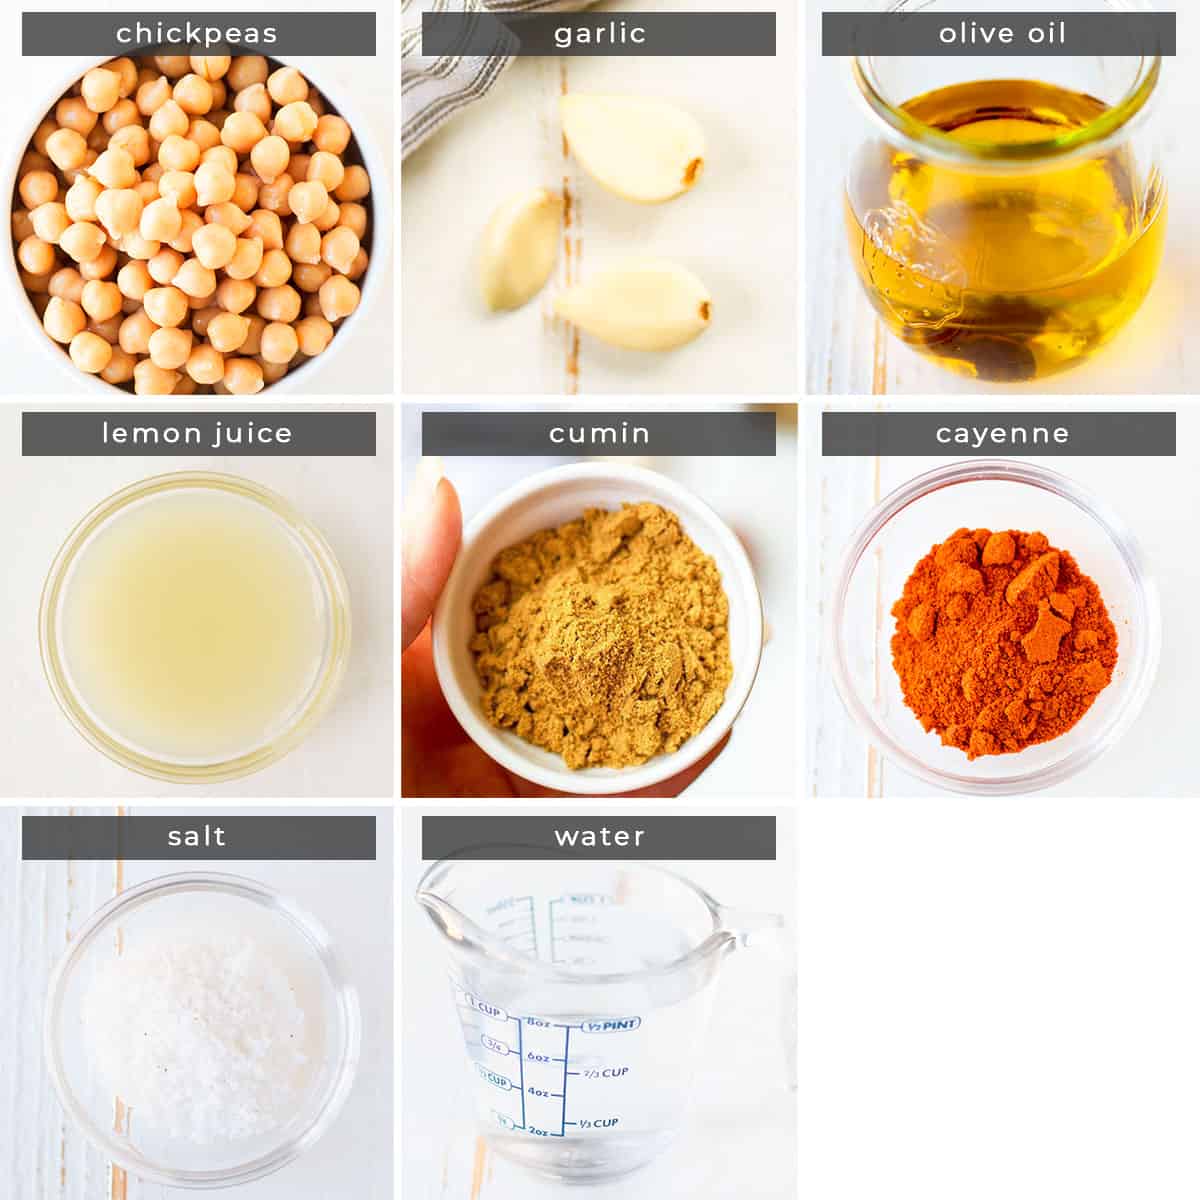 Image showing recipe ingredients chickpeas, garlic, olive oil, lemon juice, cumin, cayenne, salt, and water.